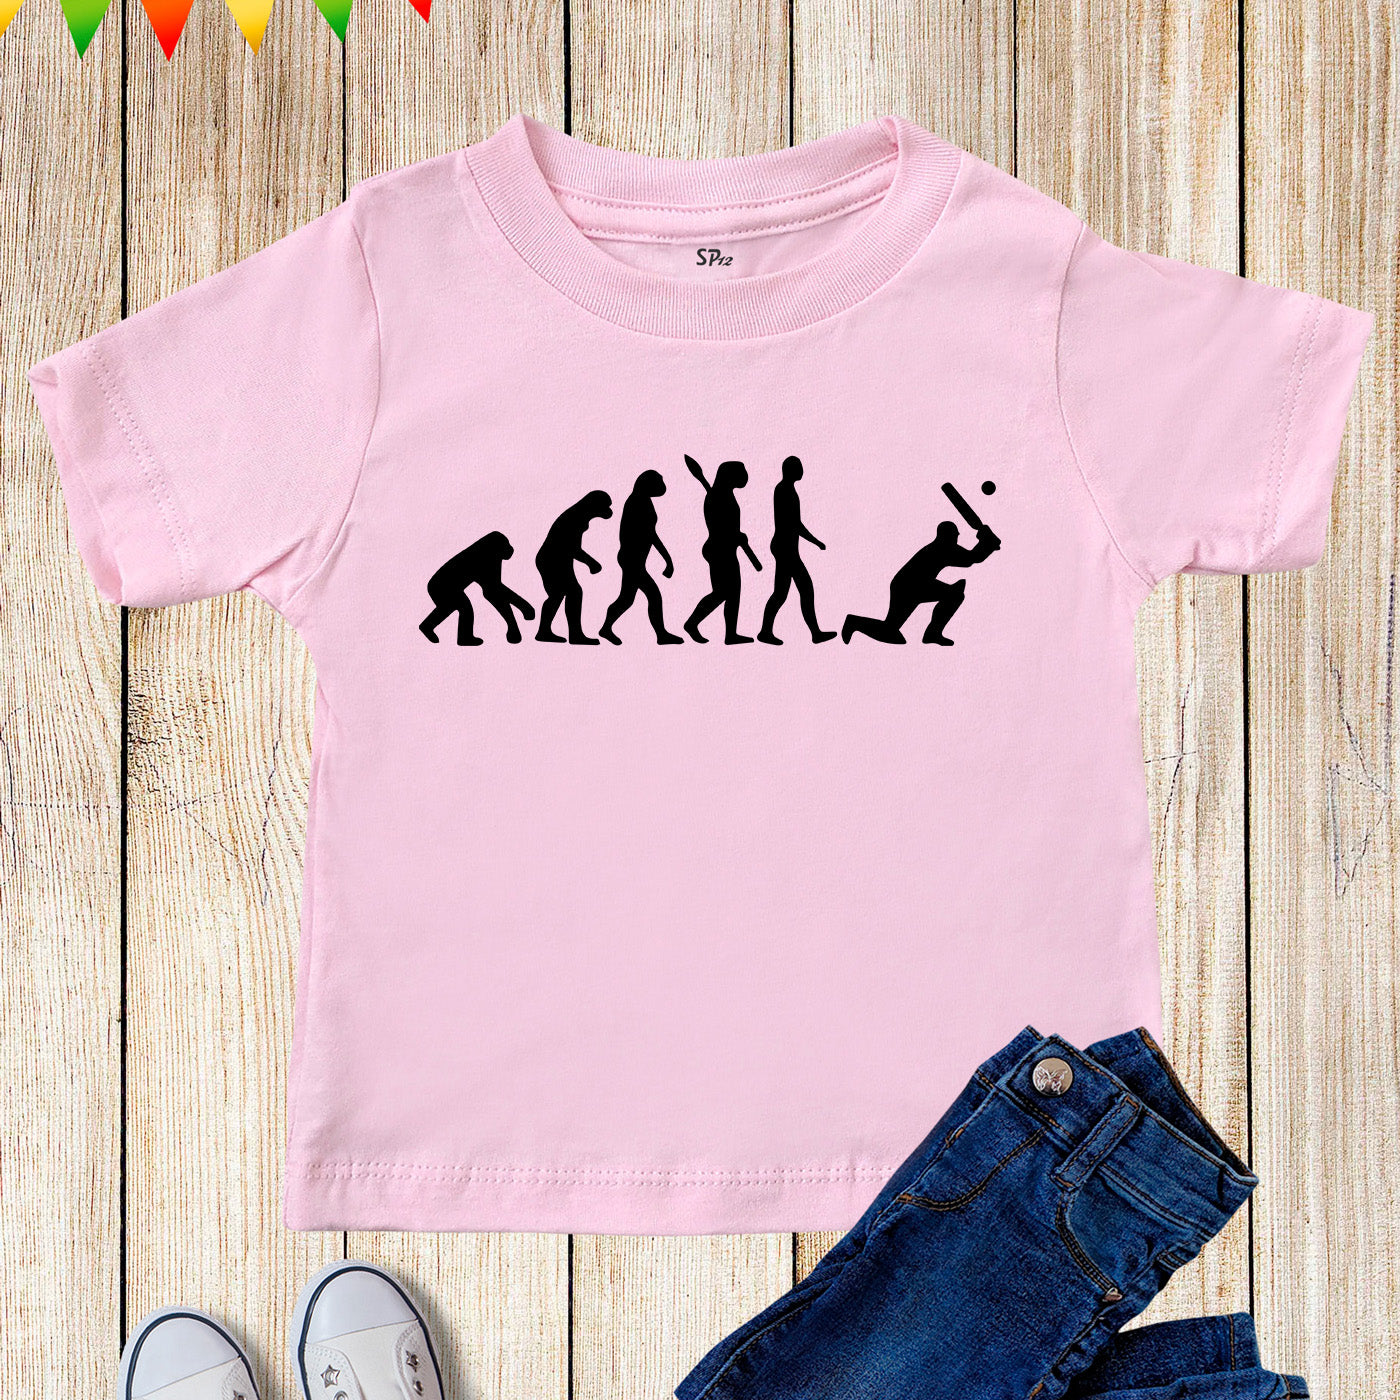 Cricket Evolution Kids T Shirt